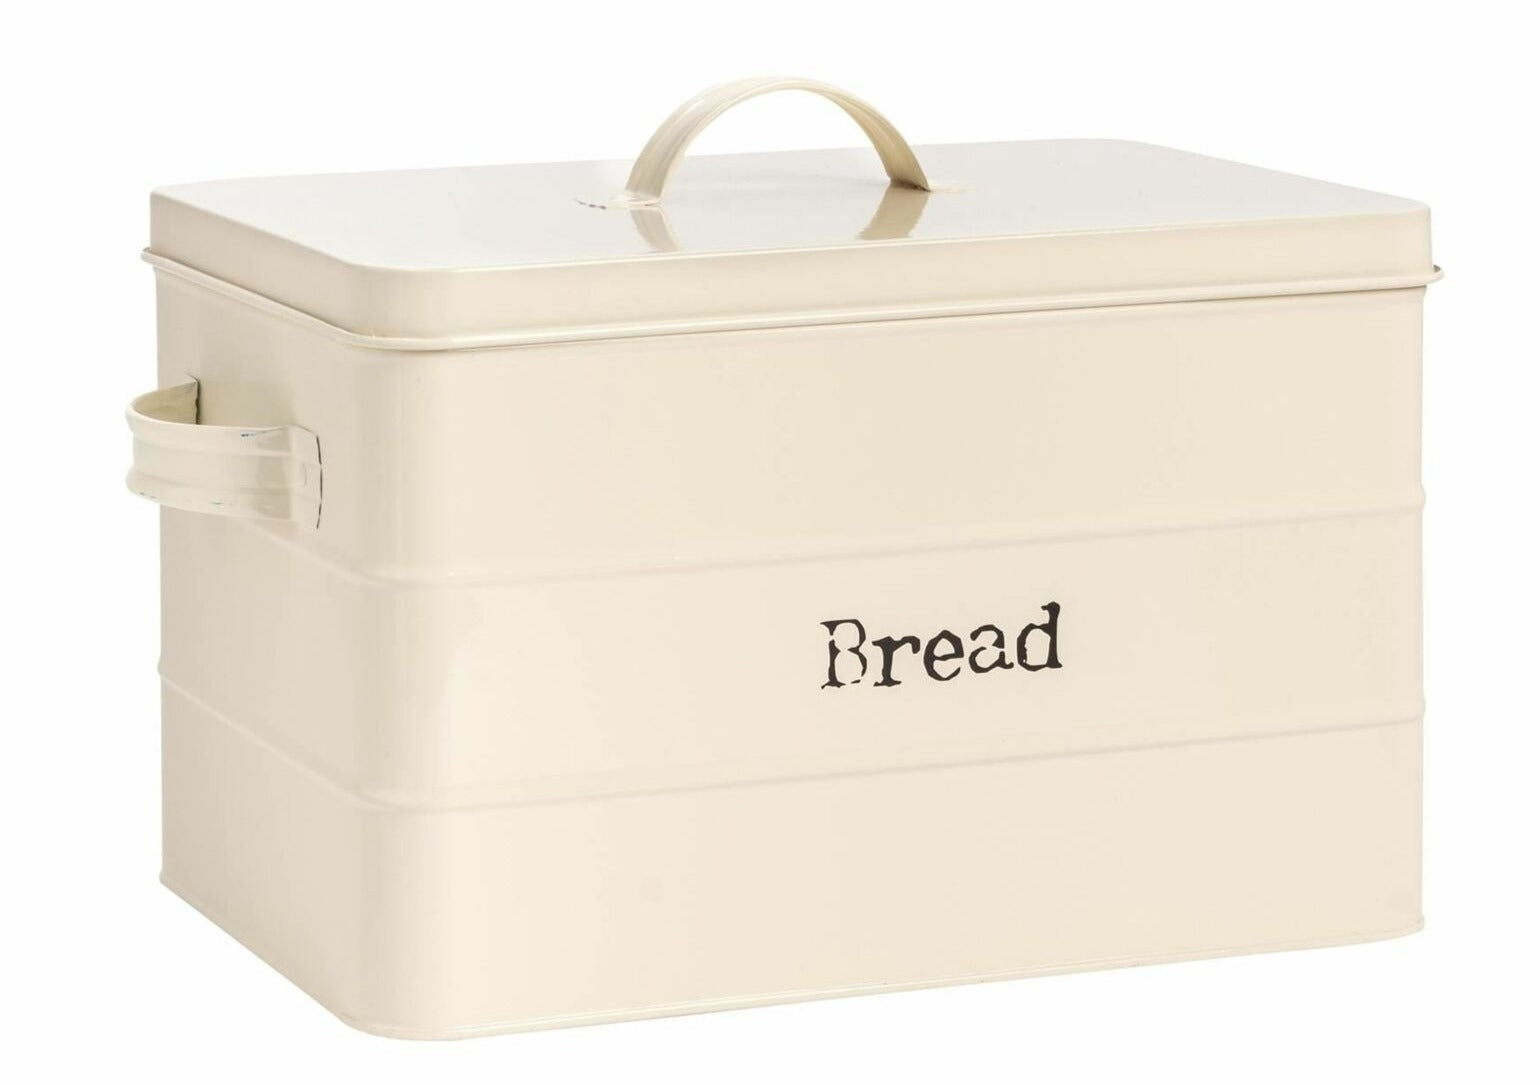 Bread Bin Storage Kitchen Loaf Roll Food Box Retro Home Container Cream